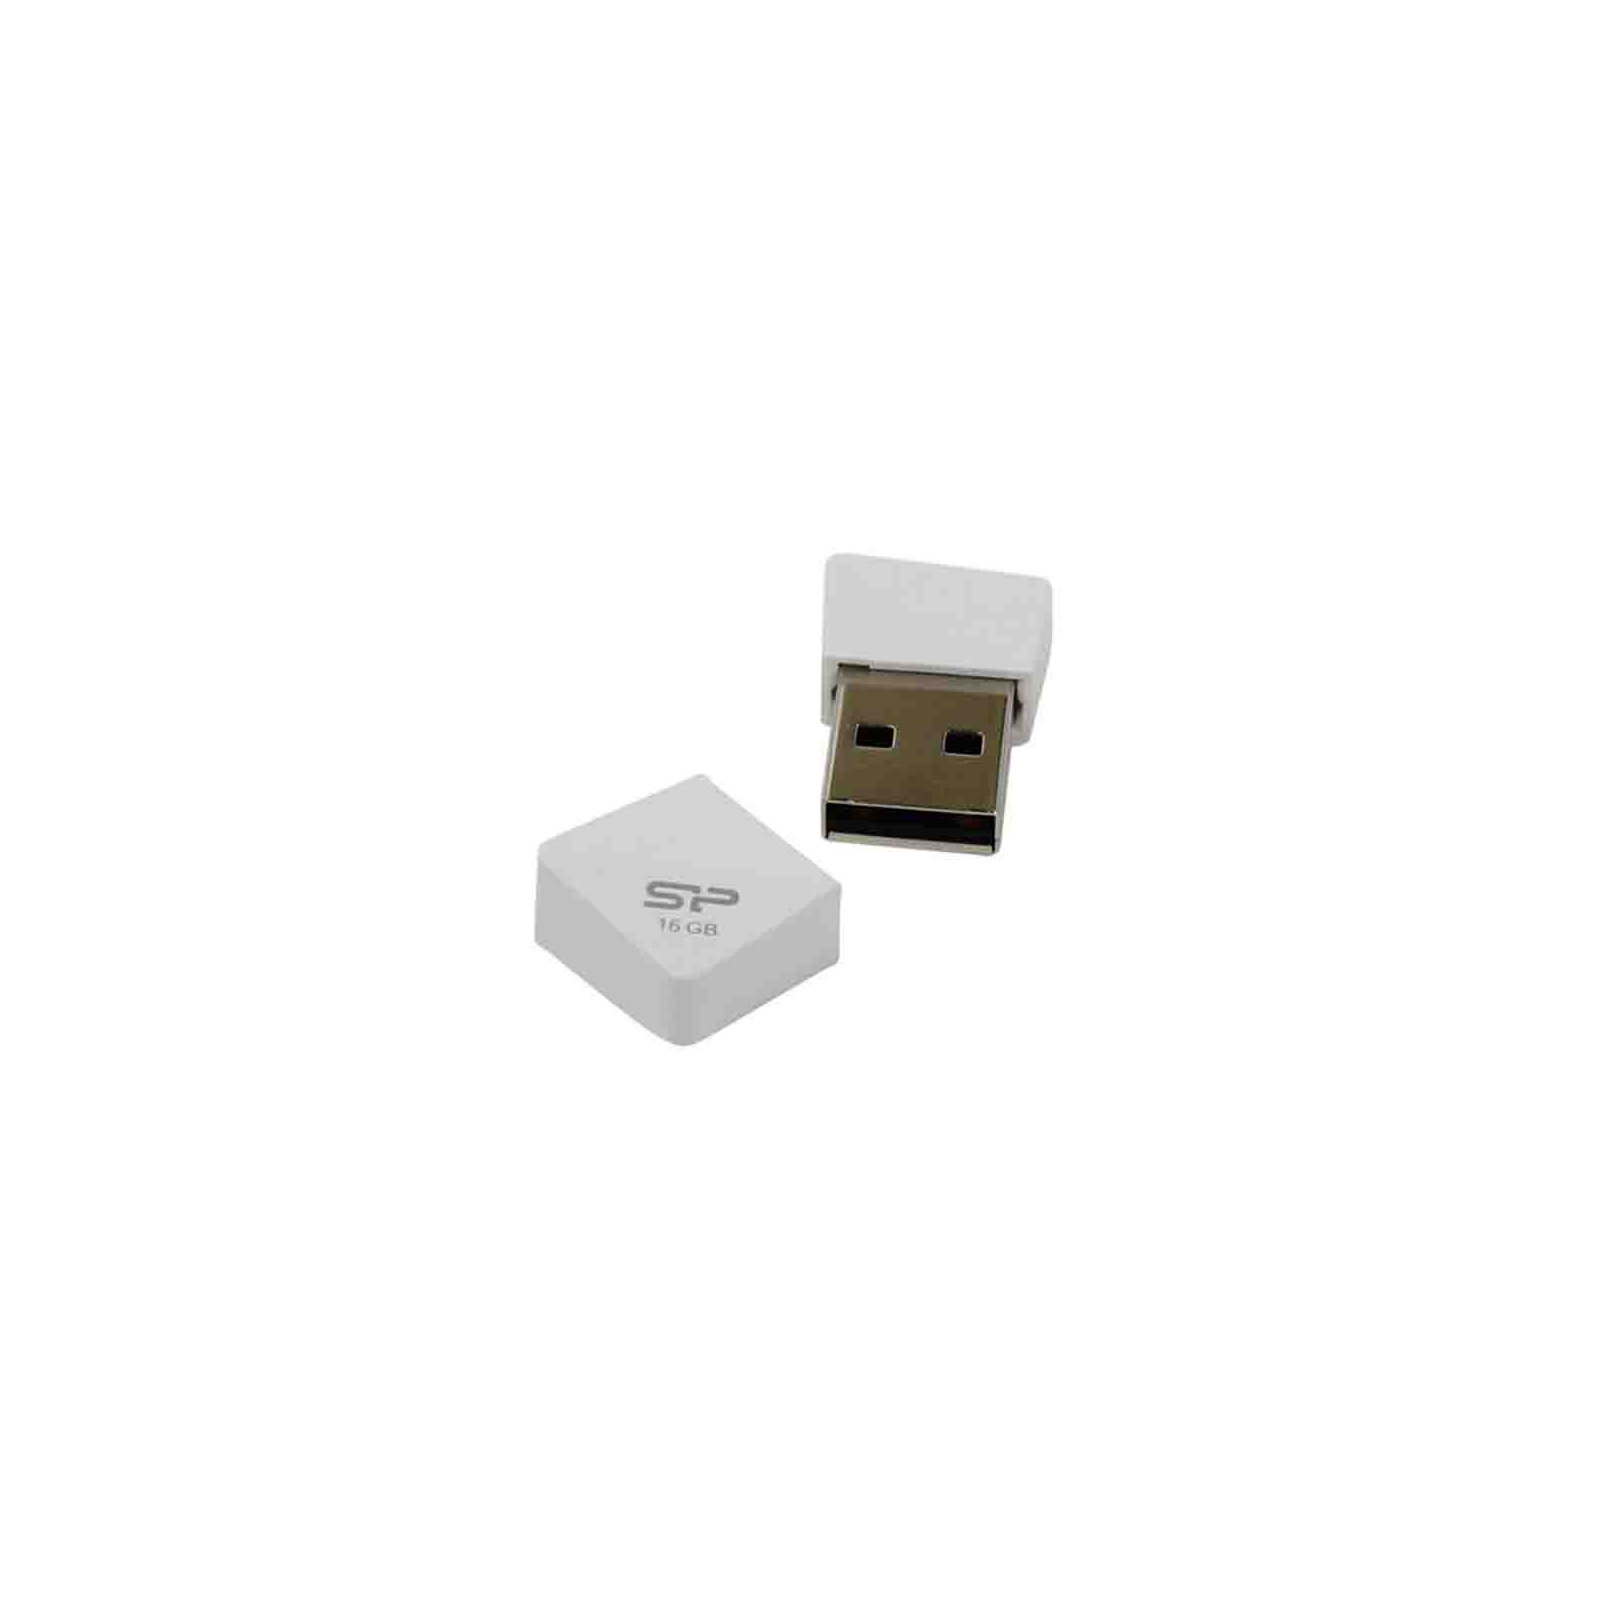 USB флеш накопитель Silicon Power 16Gb Touch T08 White USB 2.0 (SP016GBUF2T08V1W) изображение 5